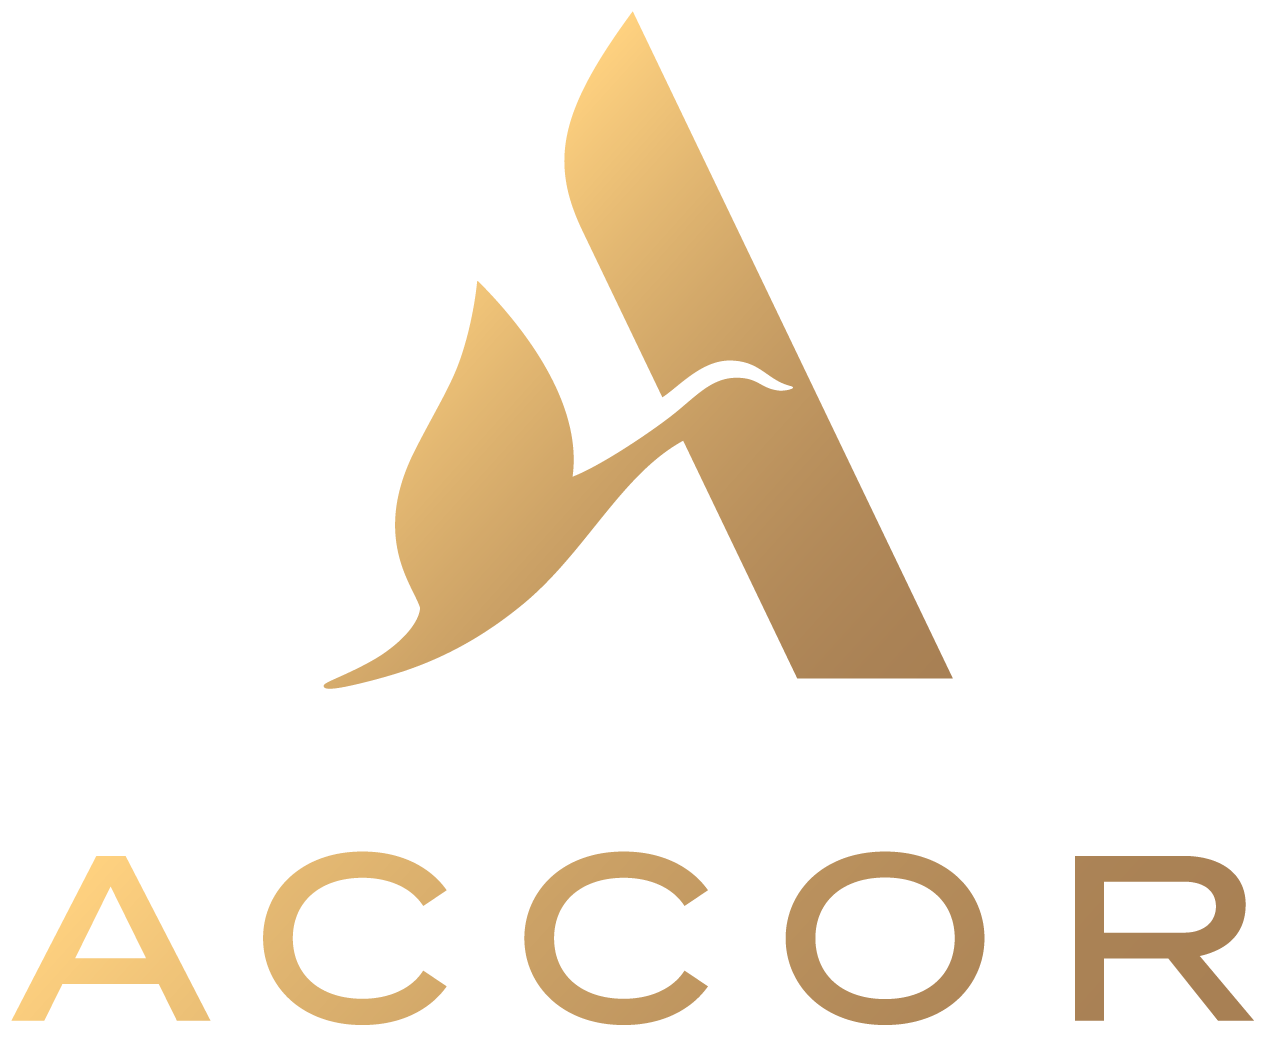 Accor Hotels logo